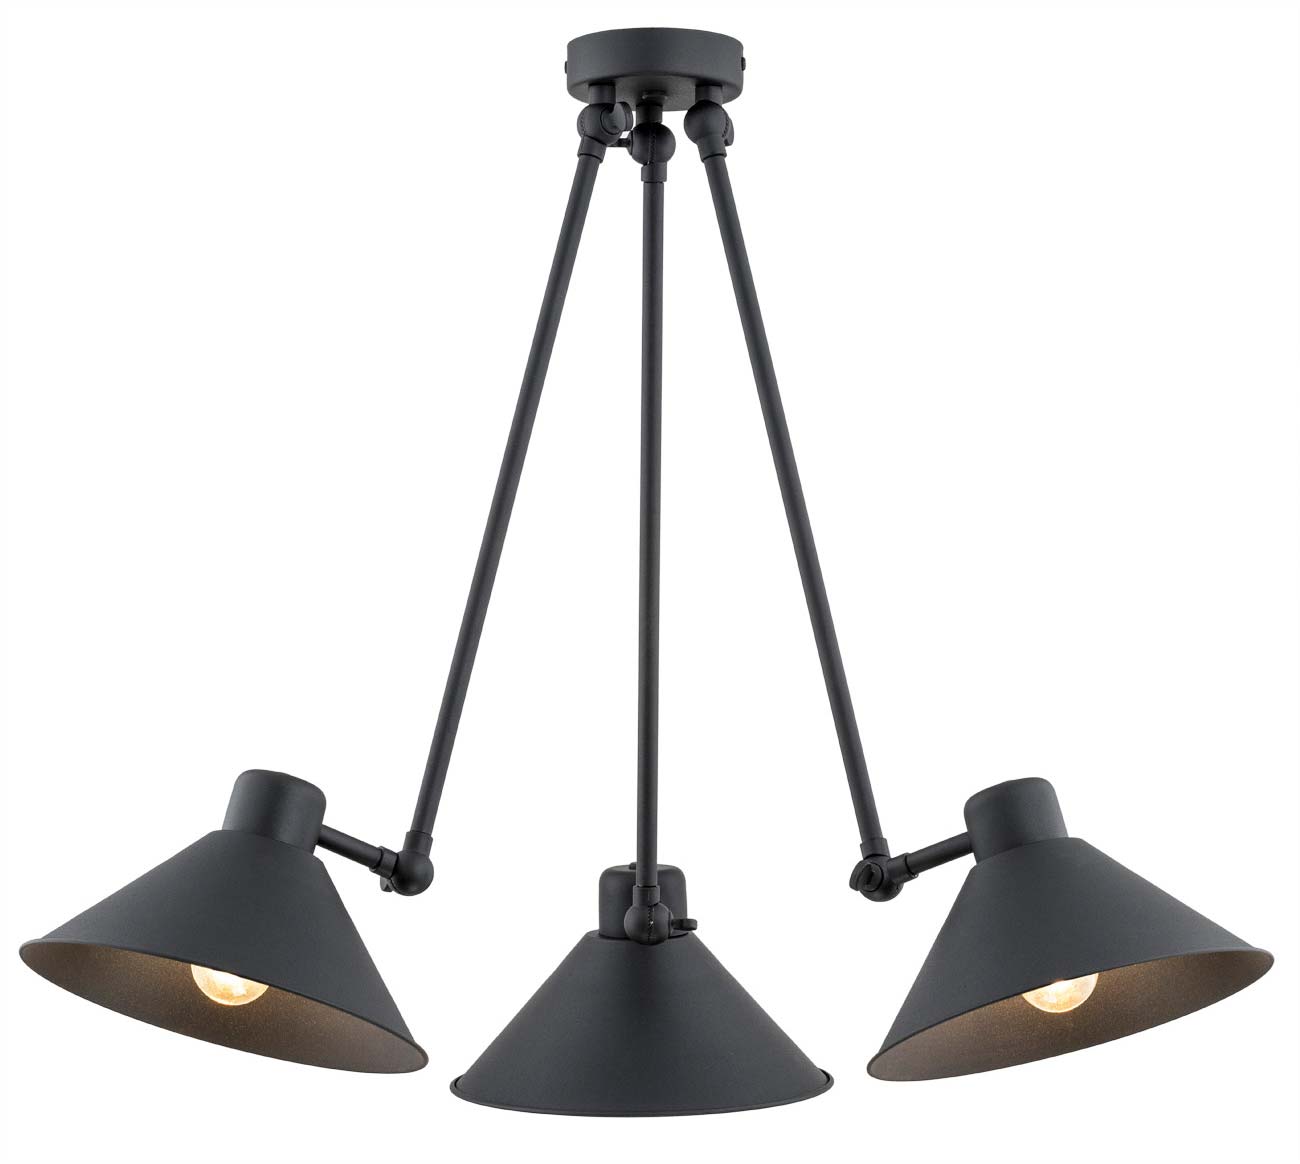 ARGON ALTEA 1452 lampa wisząca 3 pł. kolor czarny